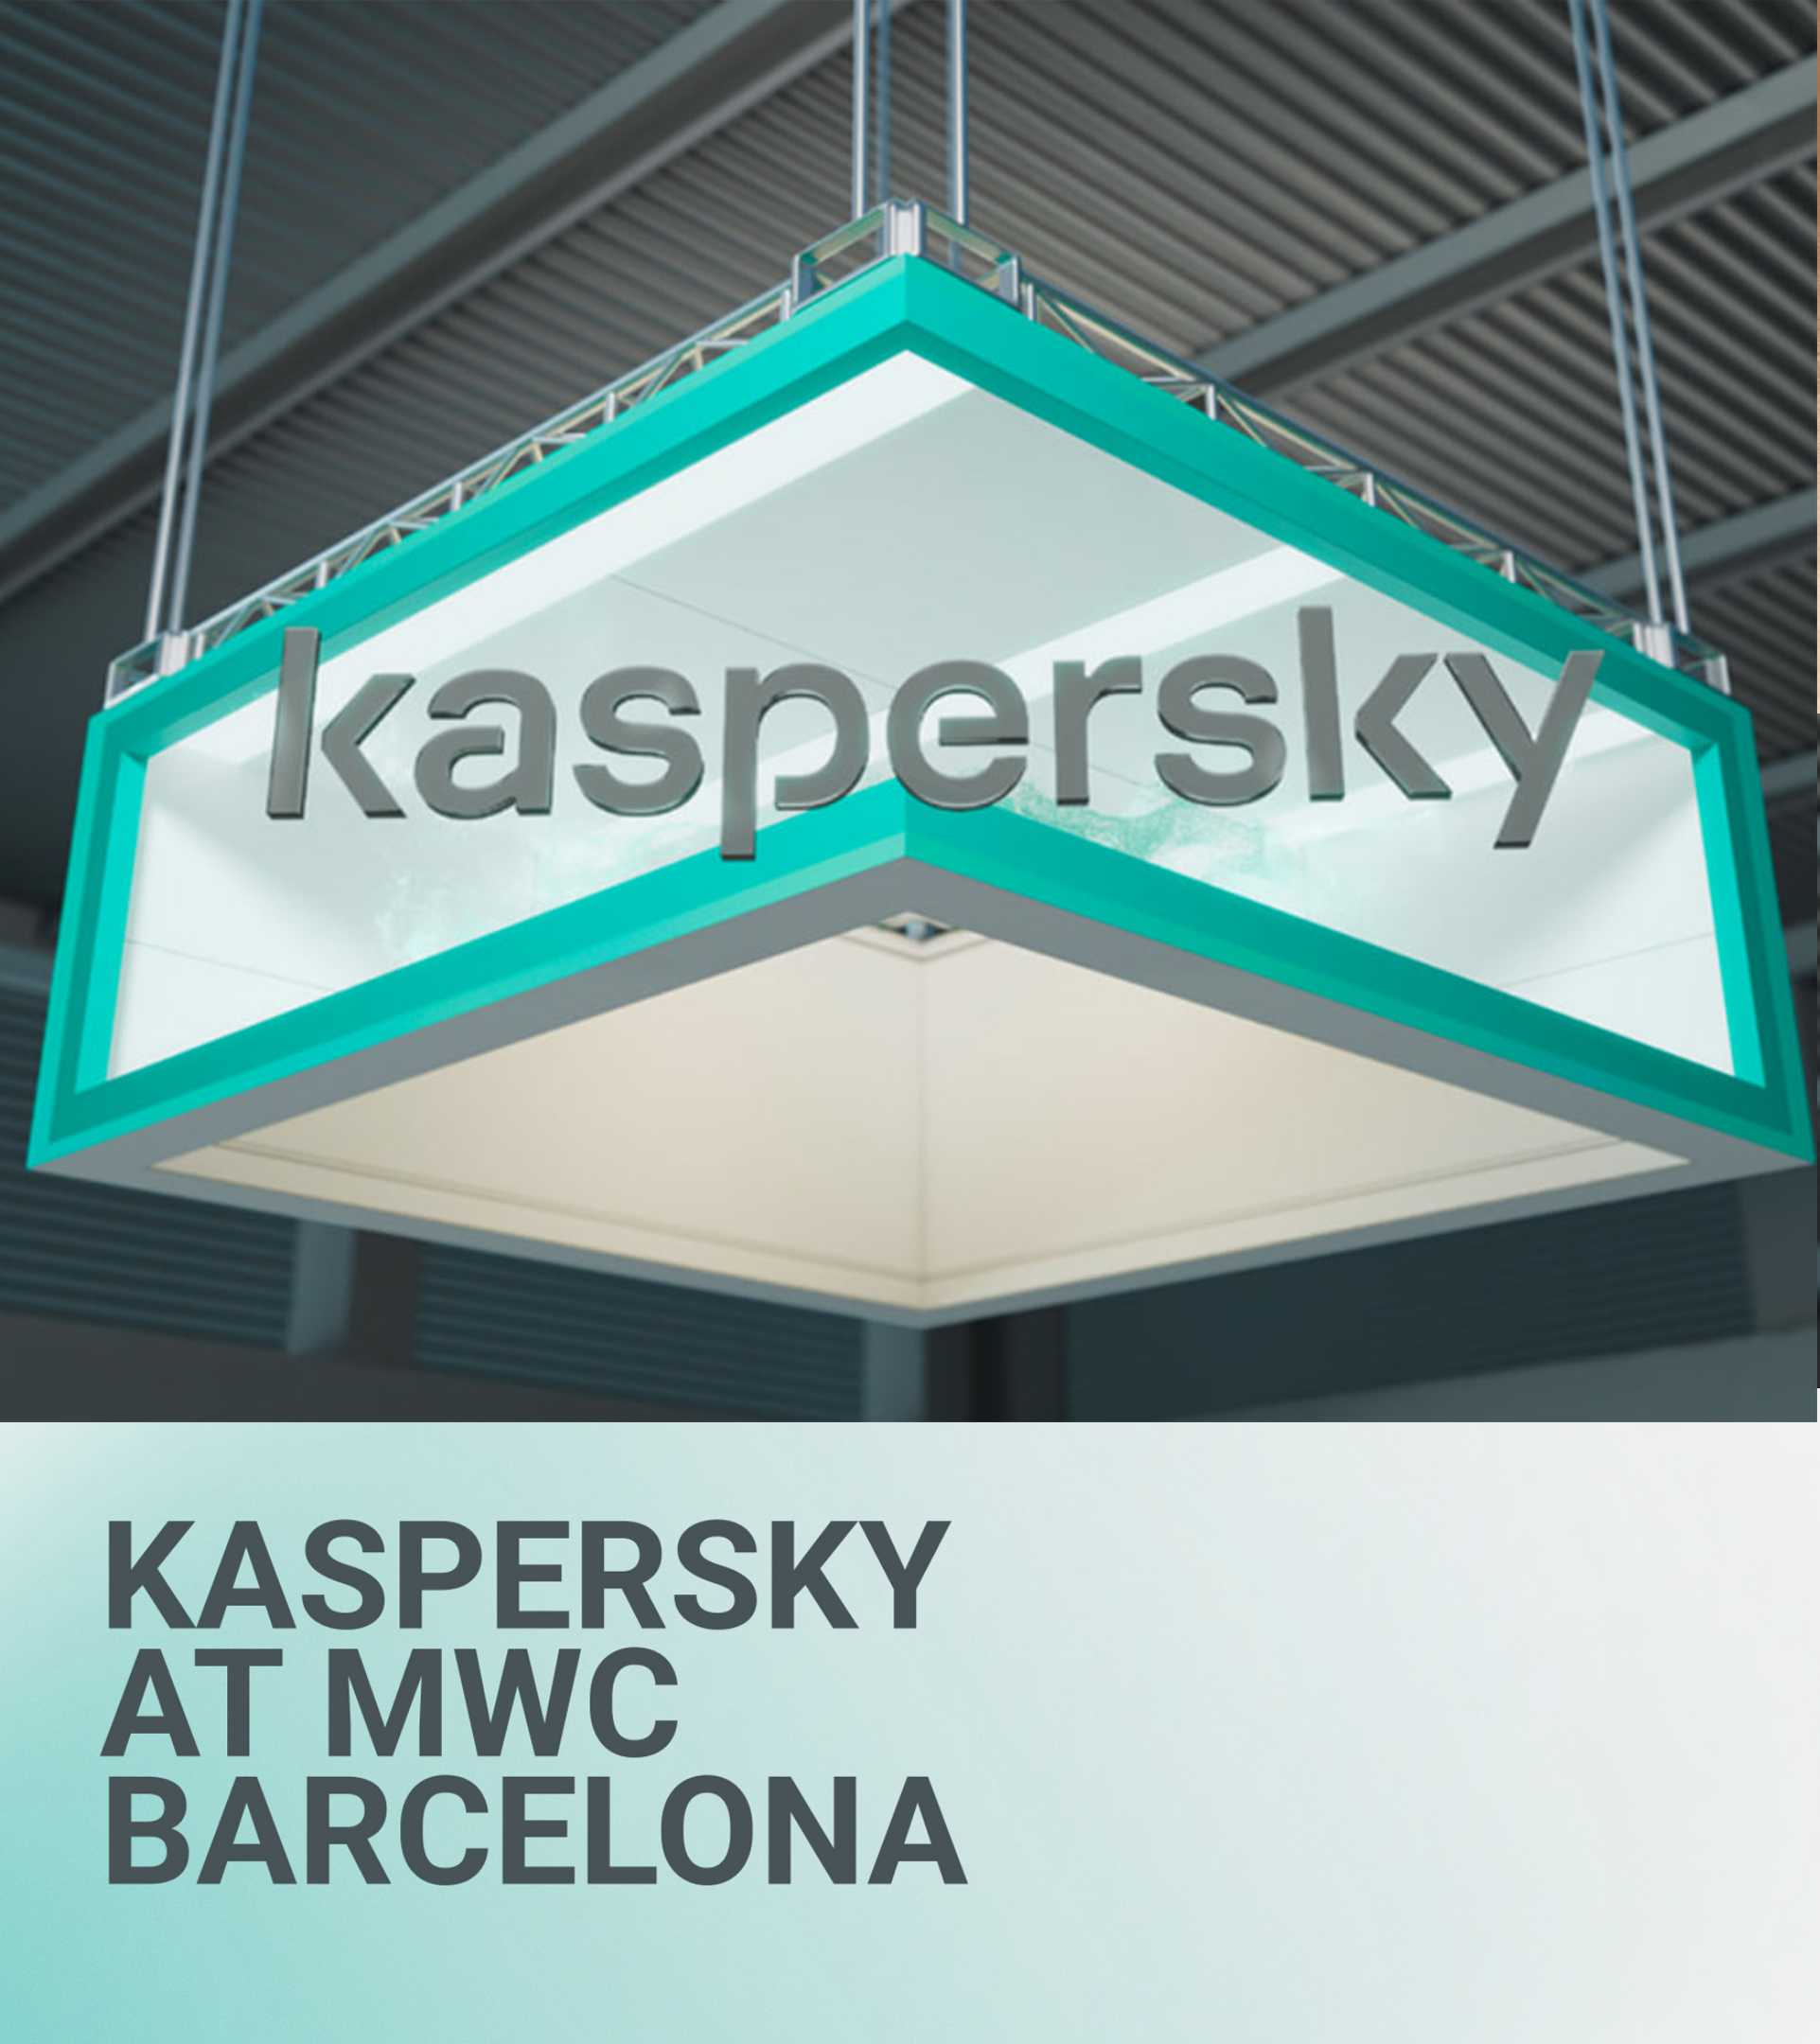 Kaspersky at MWC Barcelona